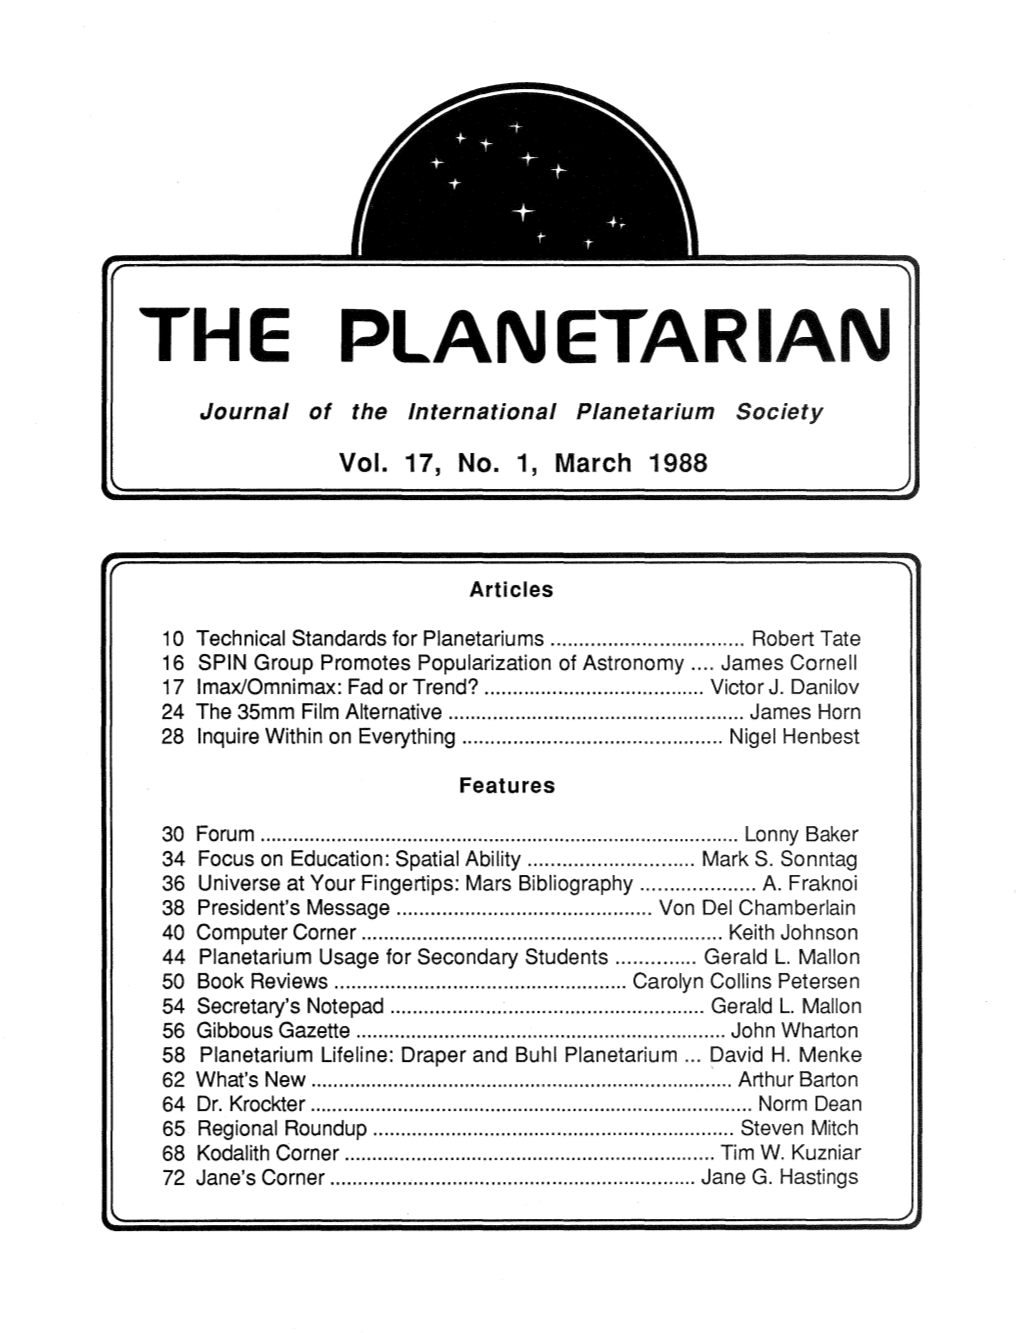 The Planetarian